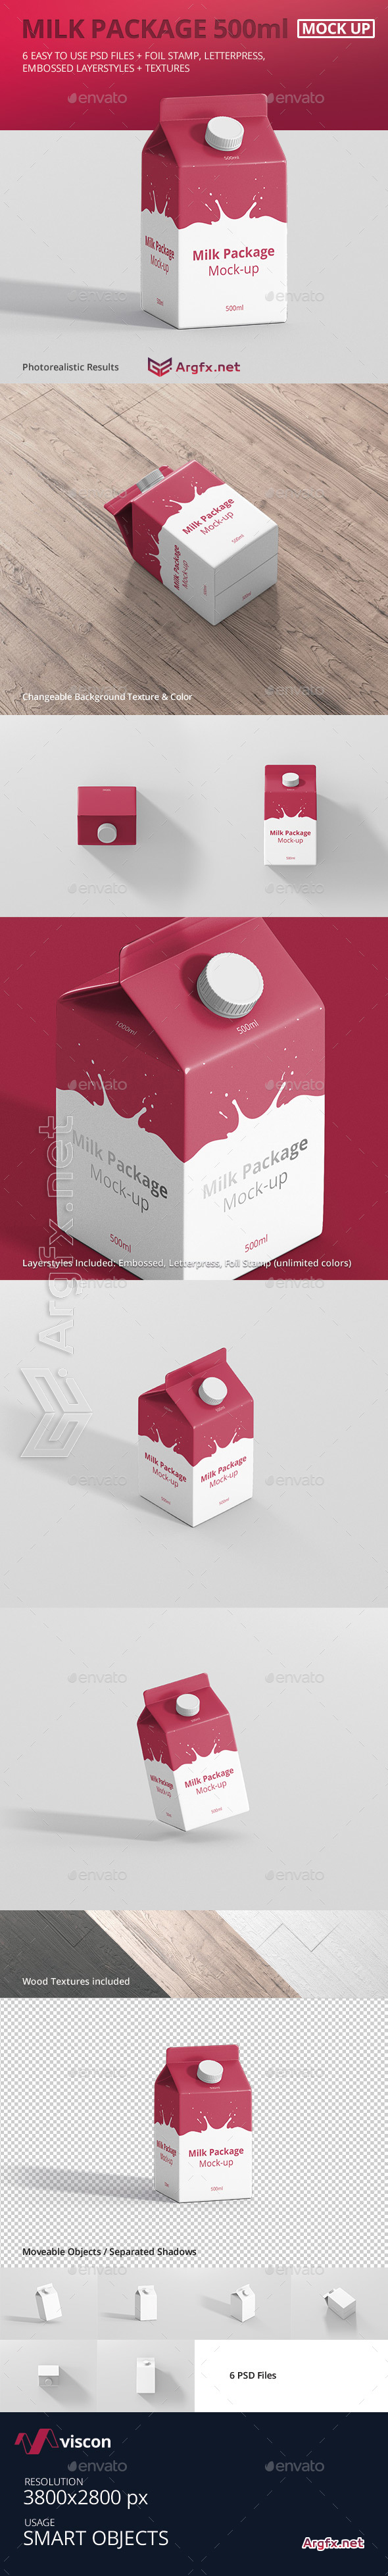 GR - Juice / Milk Mockup - 500ml Carton Box 18181976